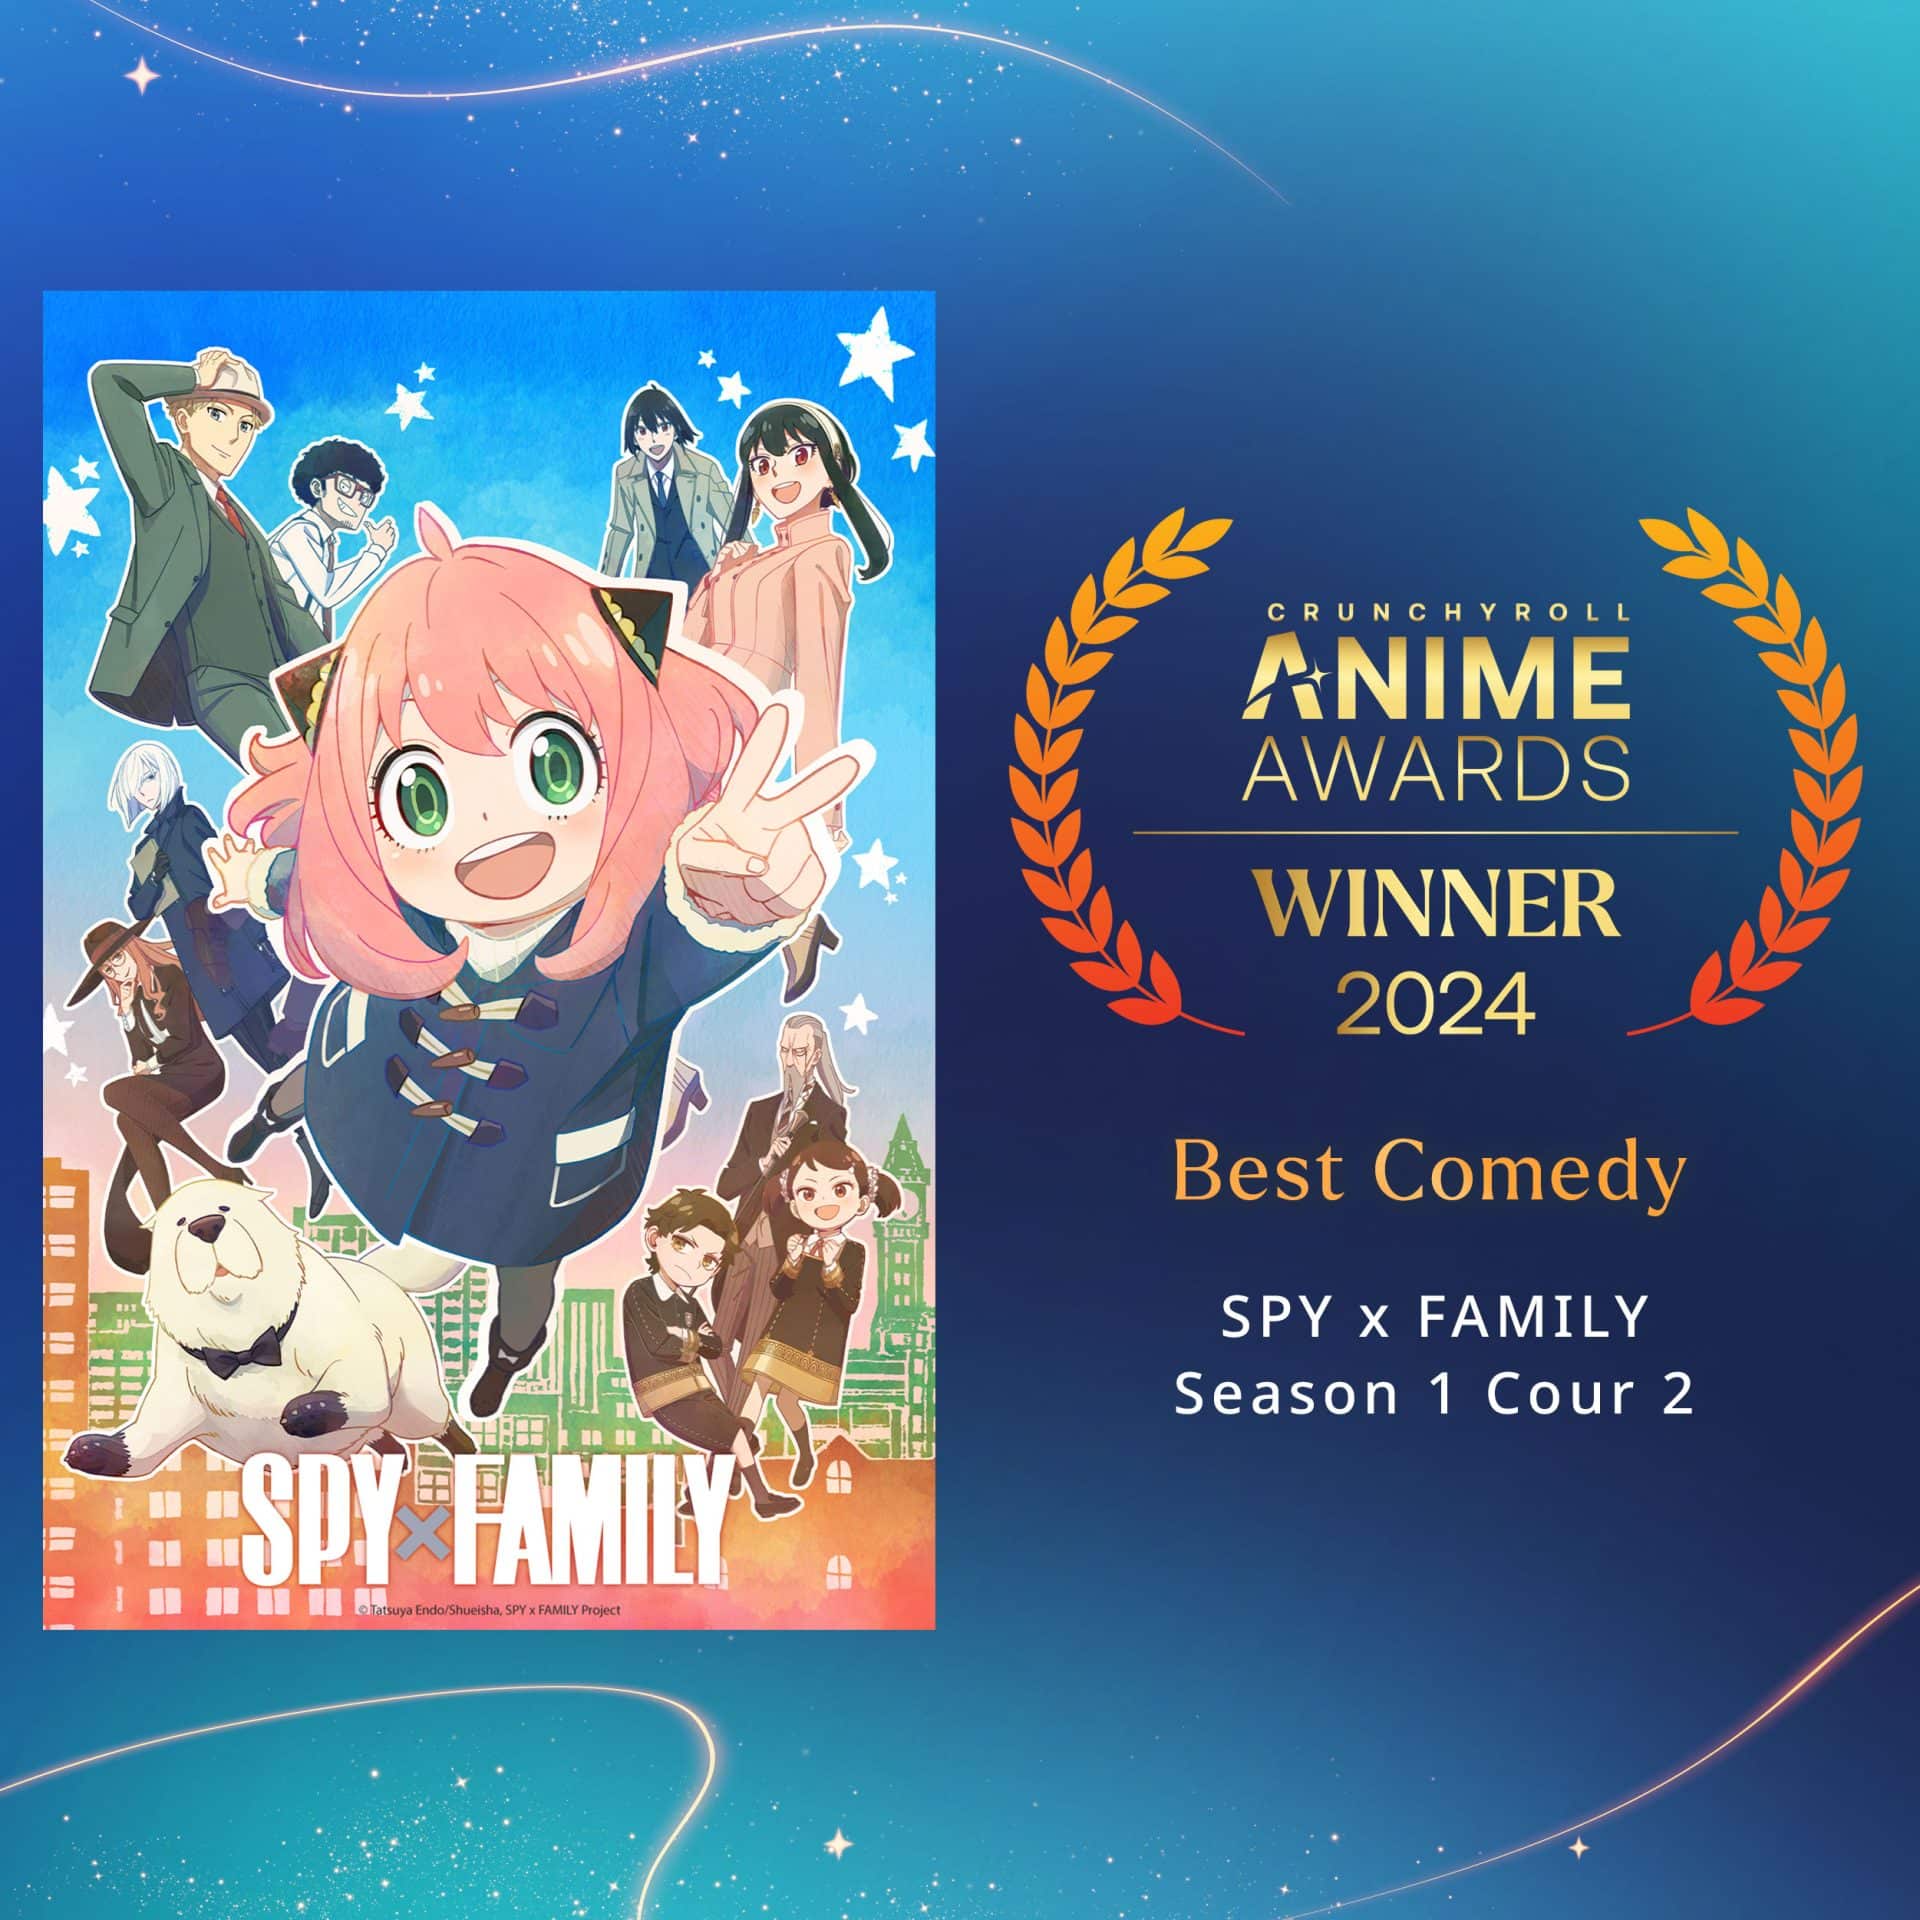 JUJUTSU KAISEN wins big at Crunchyroll Anime Awards 2024